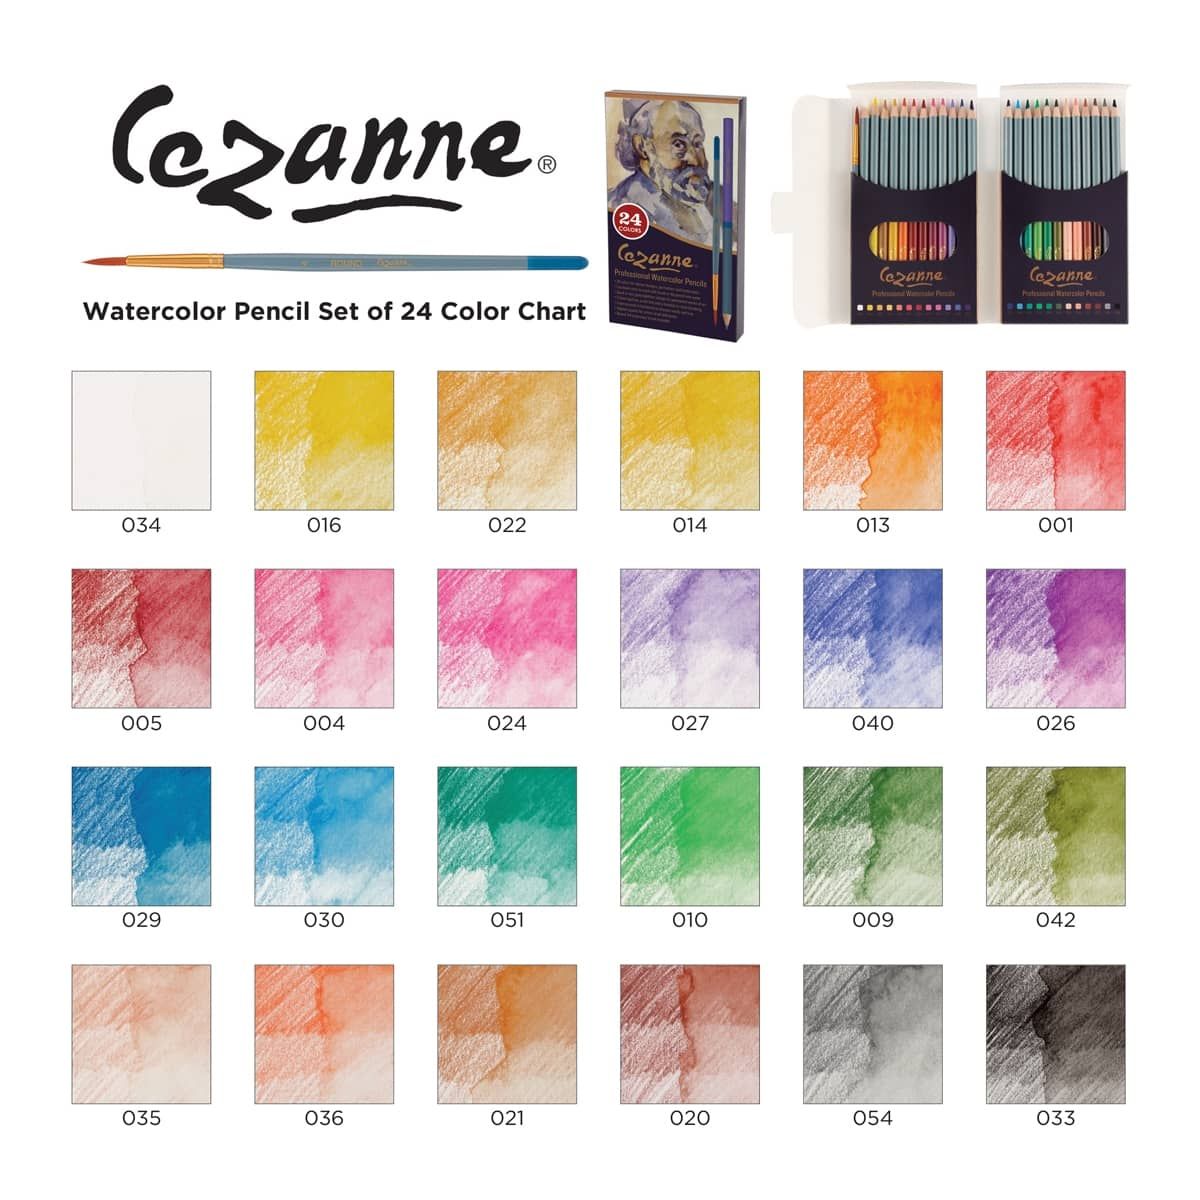 Cezanne Watercolor Pencil Color Chart